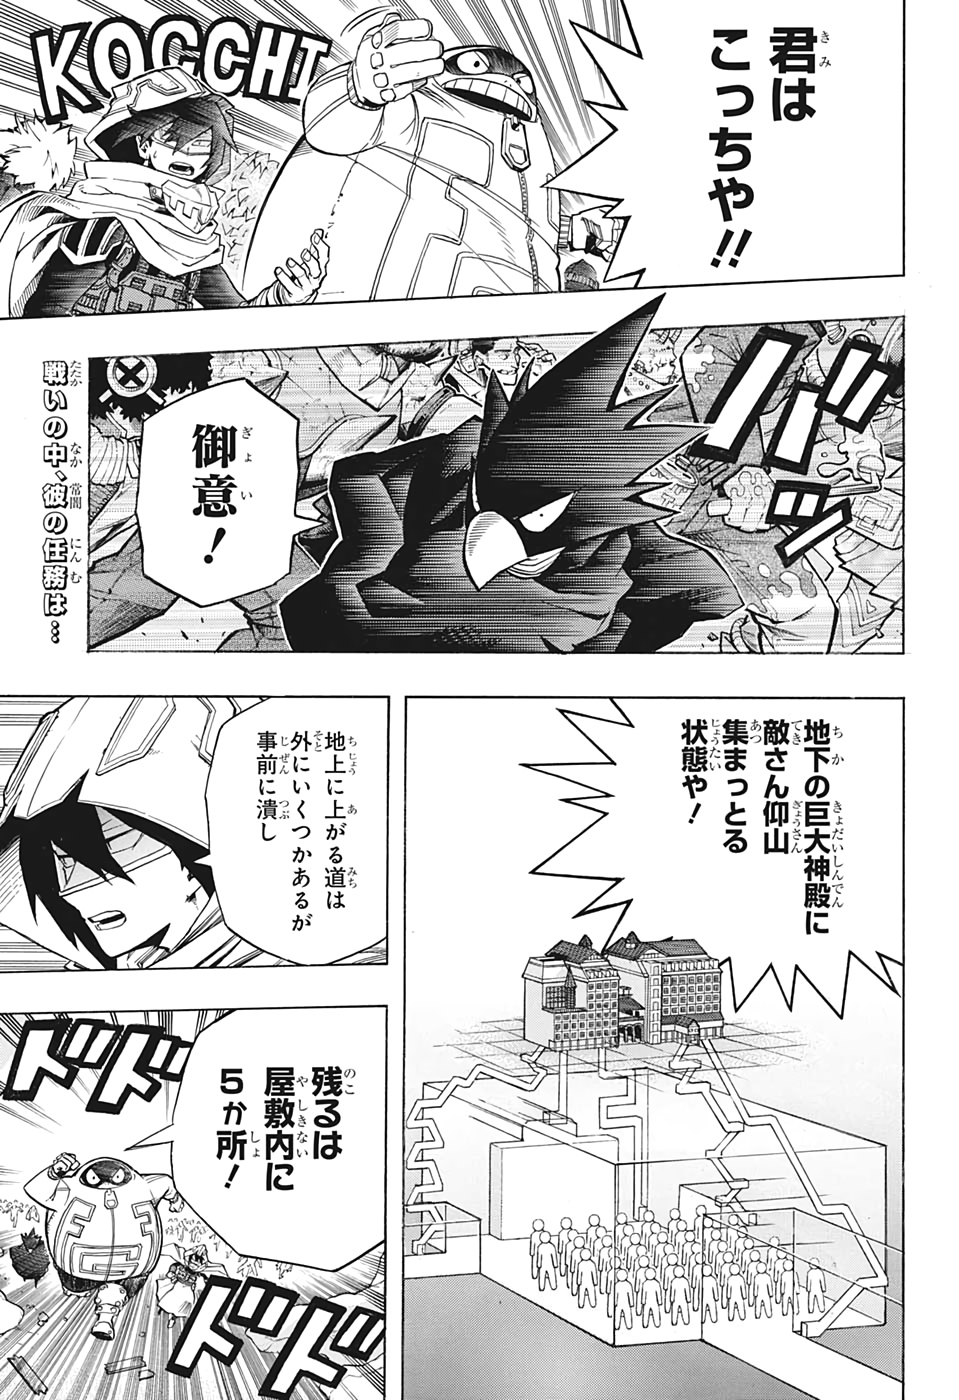 Boku no Hero Academia - Chapter 265 - Page 1